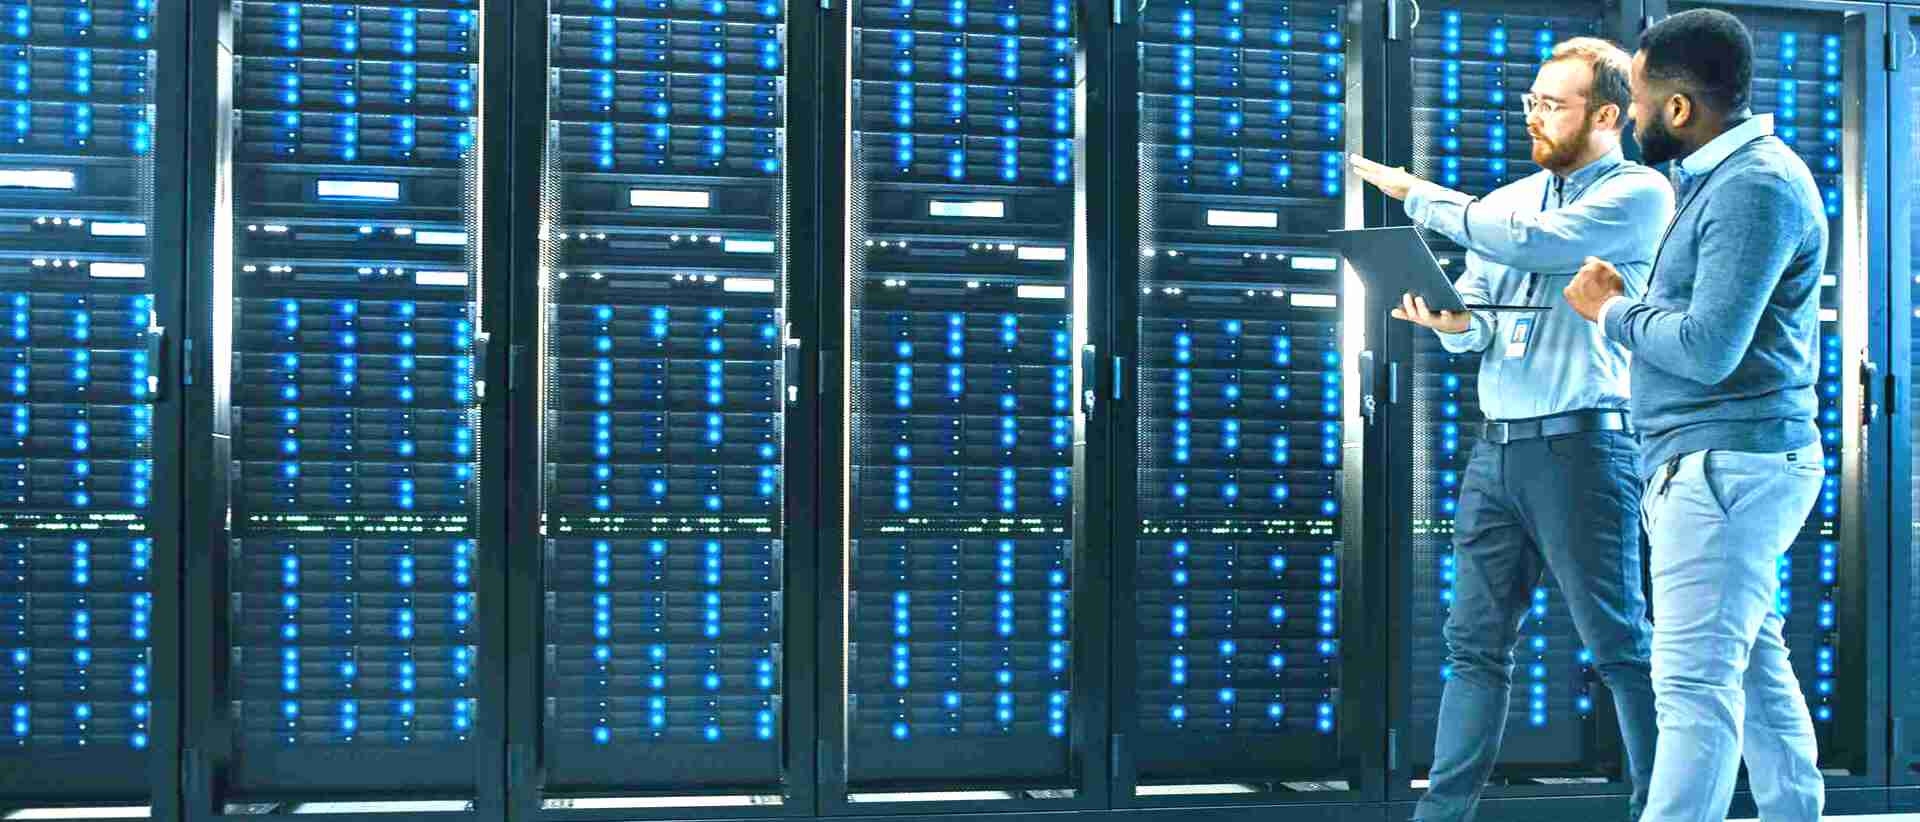 Cloud Computing - Public Cloud Servers